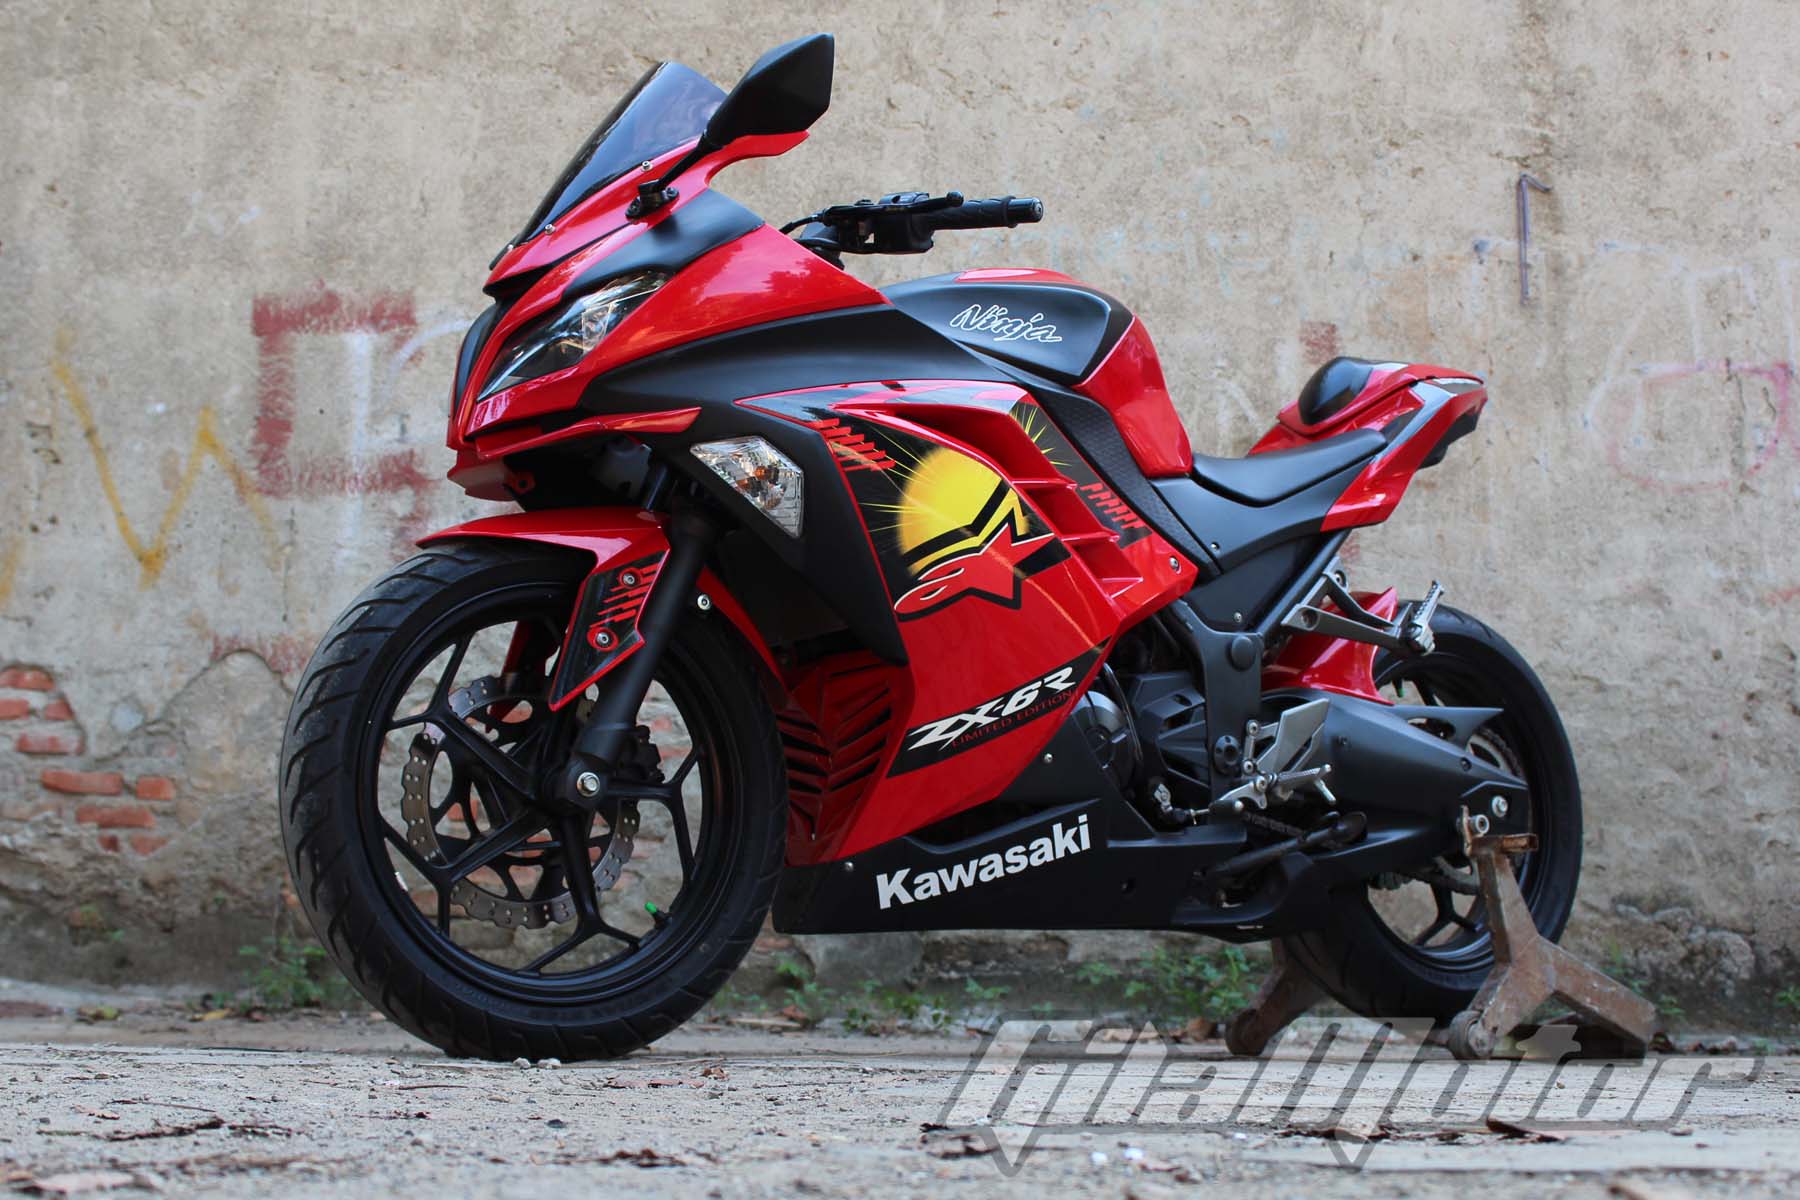 Kawasaki Ninja 250 Fi Tangerang Modifikasi Ringan Ala Bos Body Kit Gilamotor